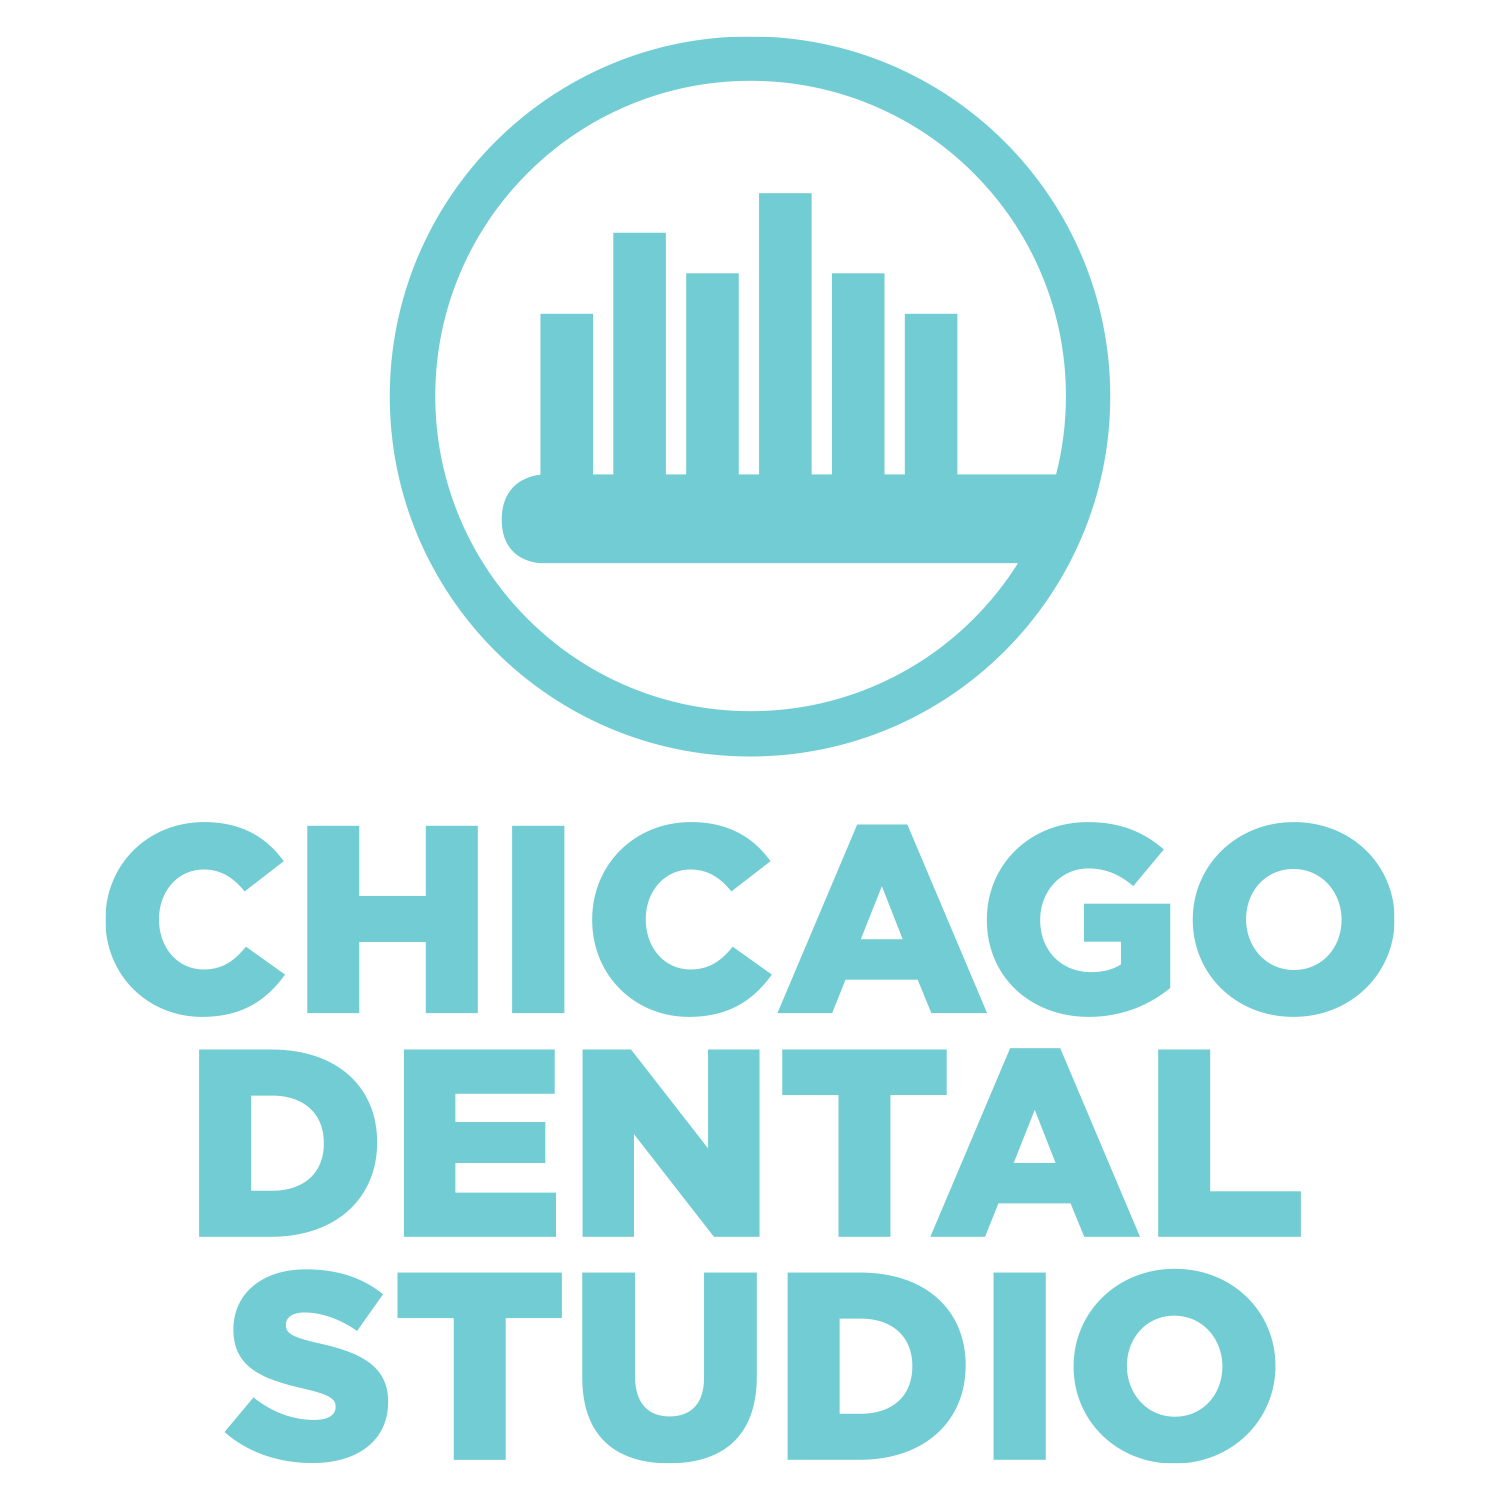 The Chicago Dental Studio, Lincoln Park - Chicago, IL 60614 - (312)668-0044 | ShowMeLocal.com